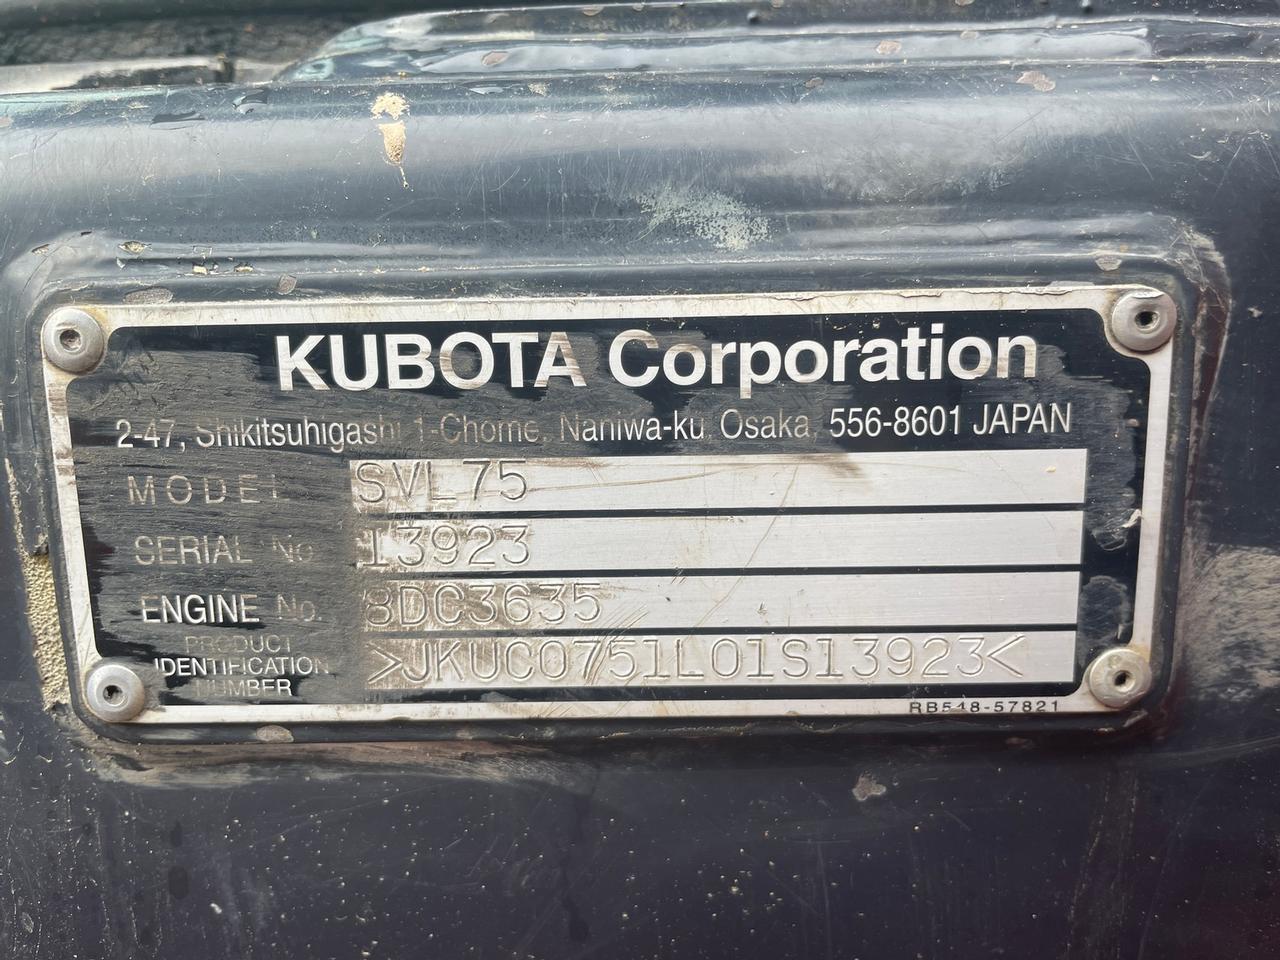 2014 Kubota SVL75 Skid Steer Loader